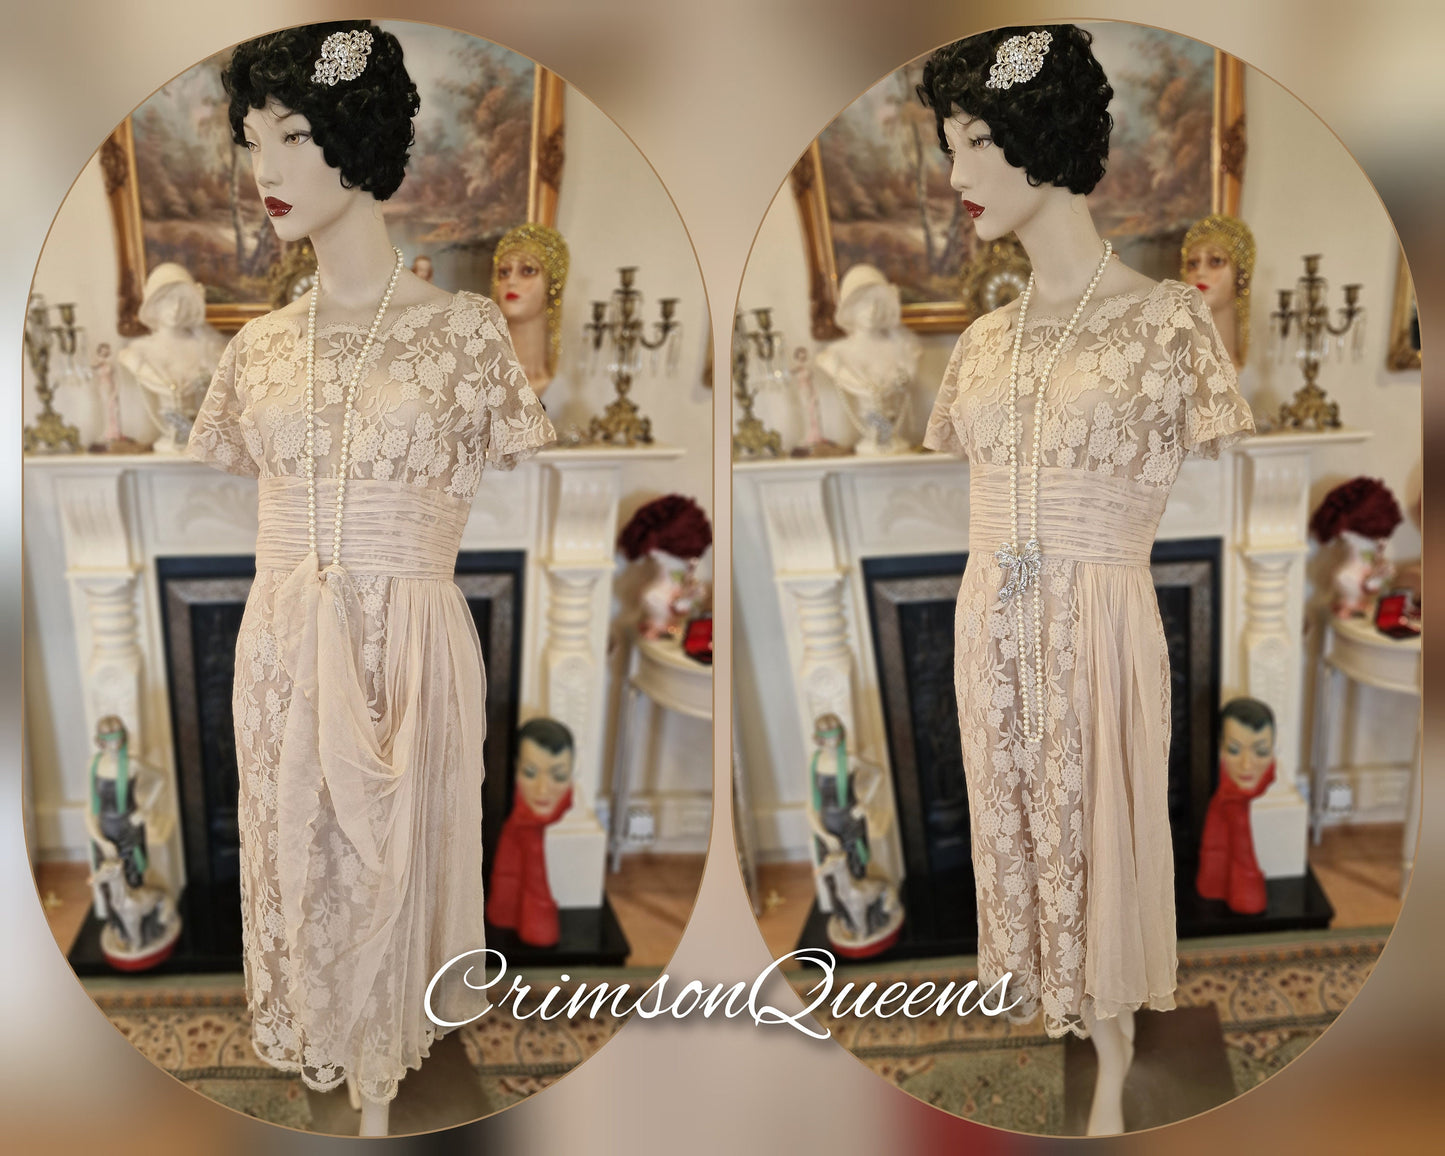 Downton Abbey dress Great Gatsby dress 1920s dress vintage lace dress 1920s garden suit dress coat duster size UK 12 US 8